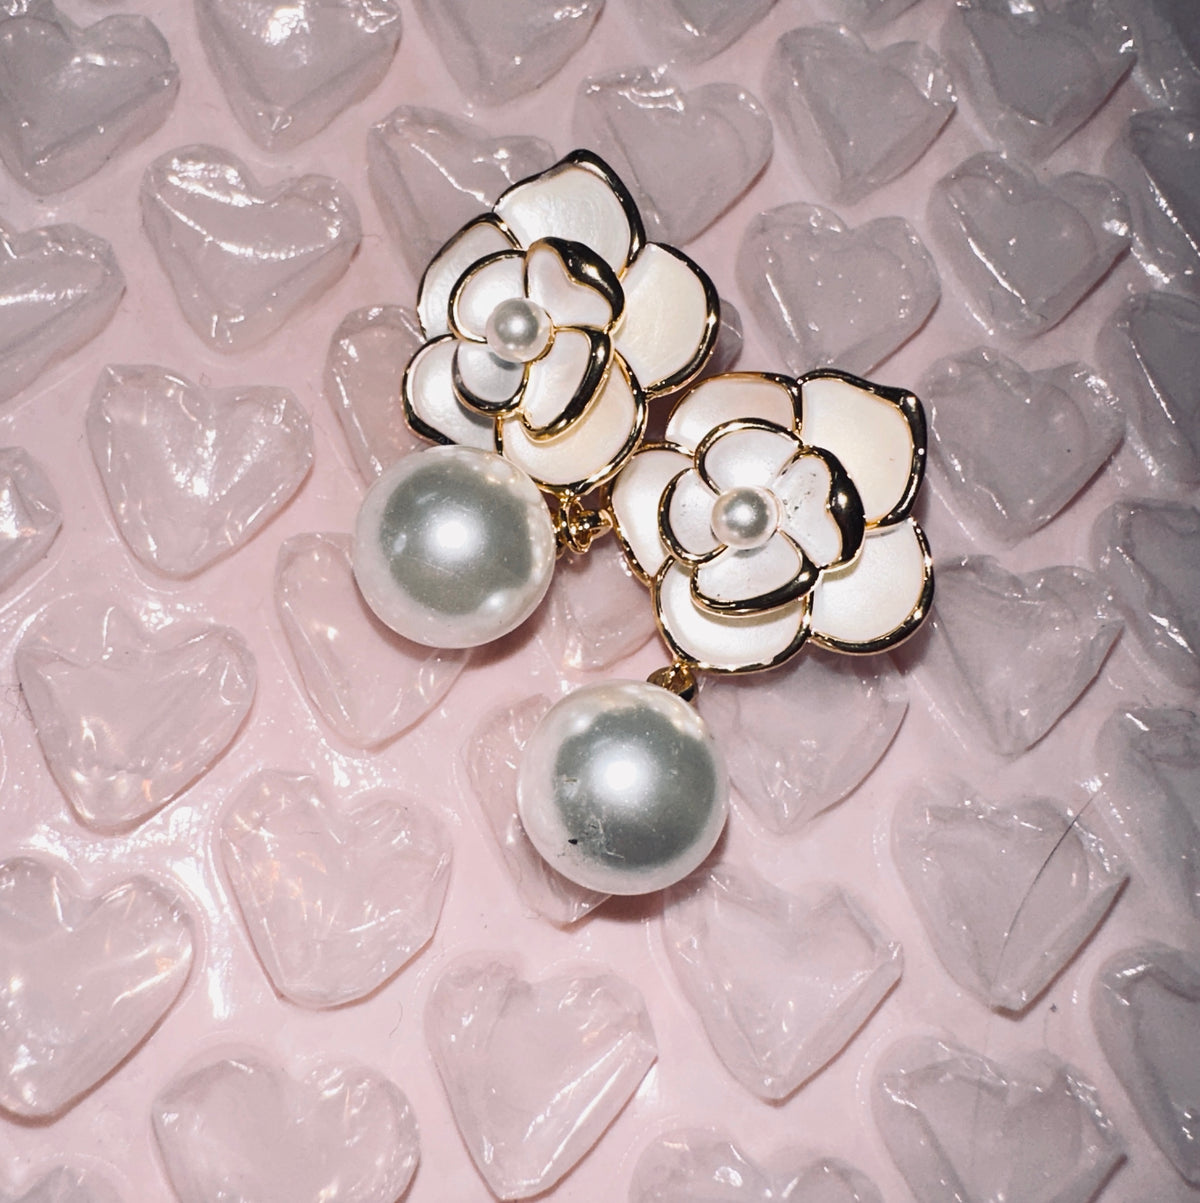 Vivian 44 white rose pearl earrings dangling alloy copper